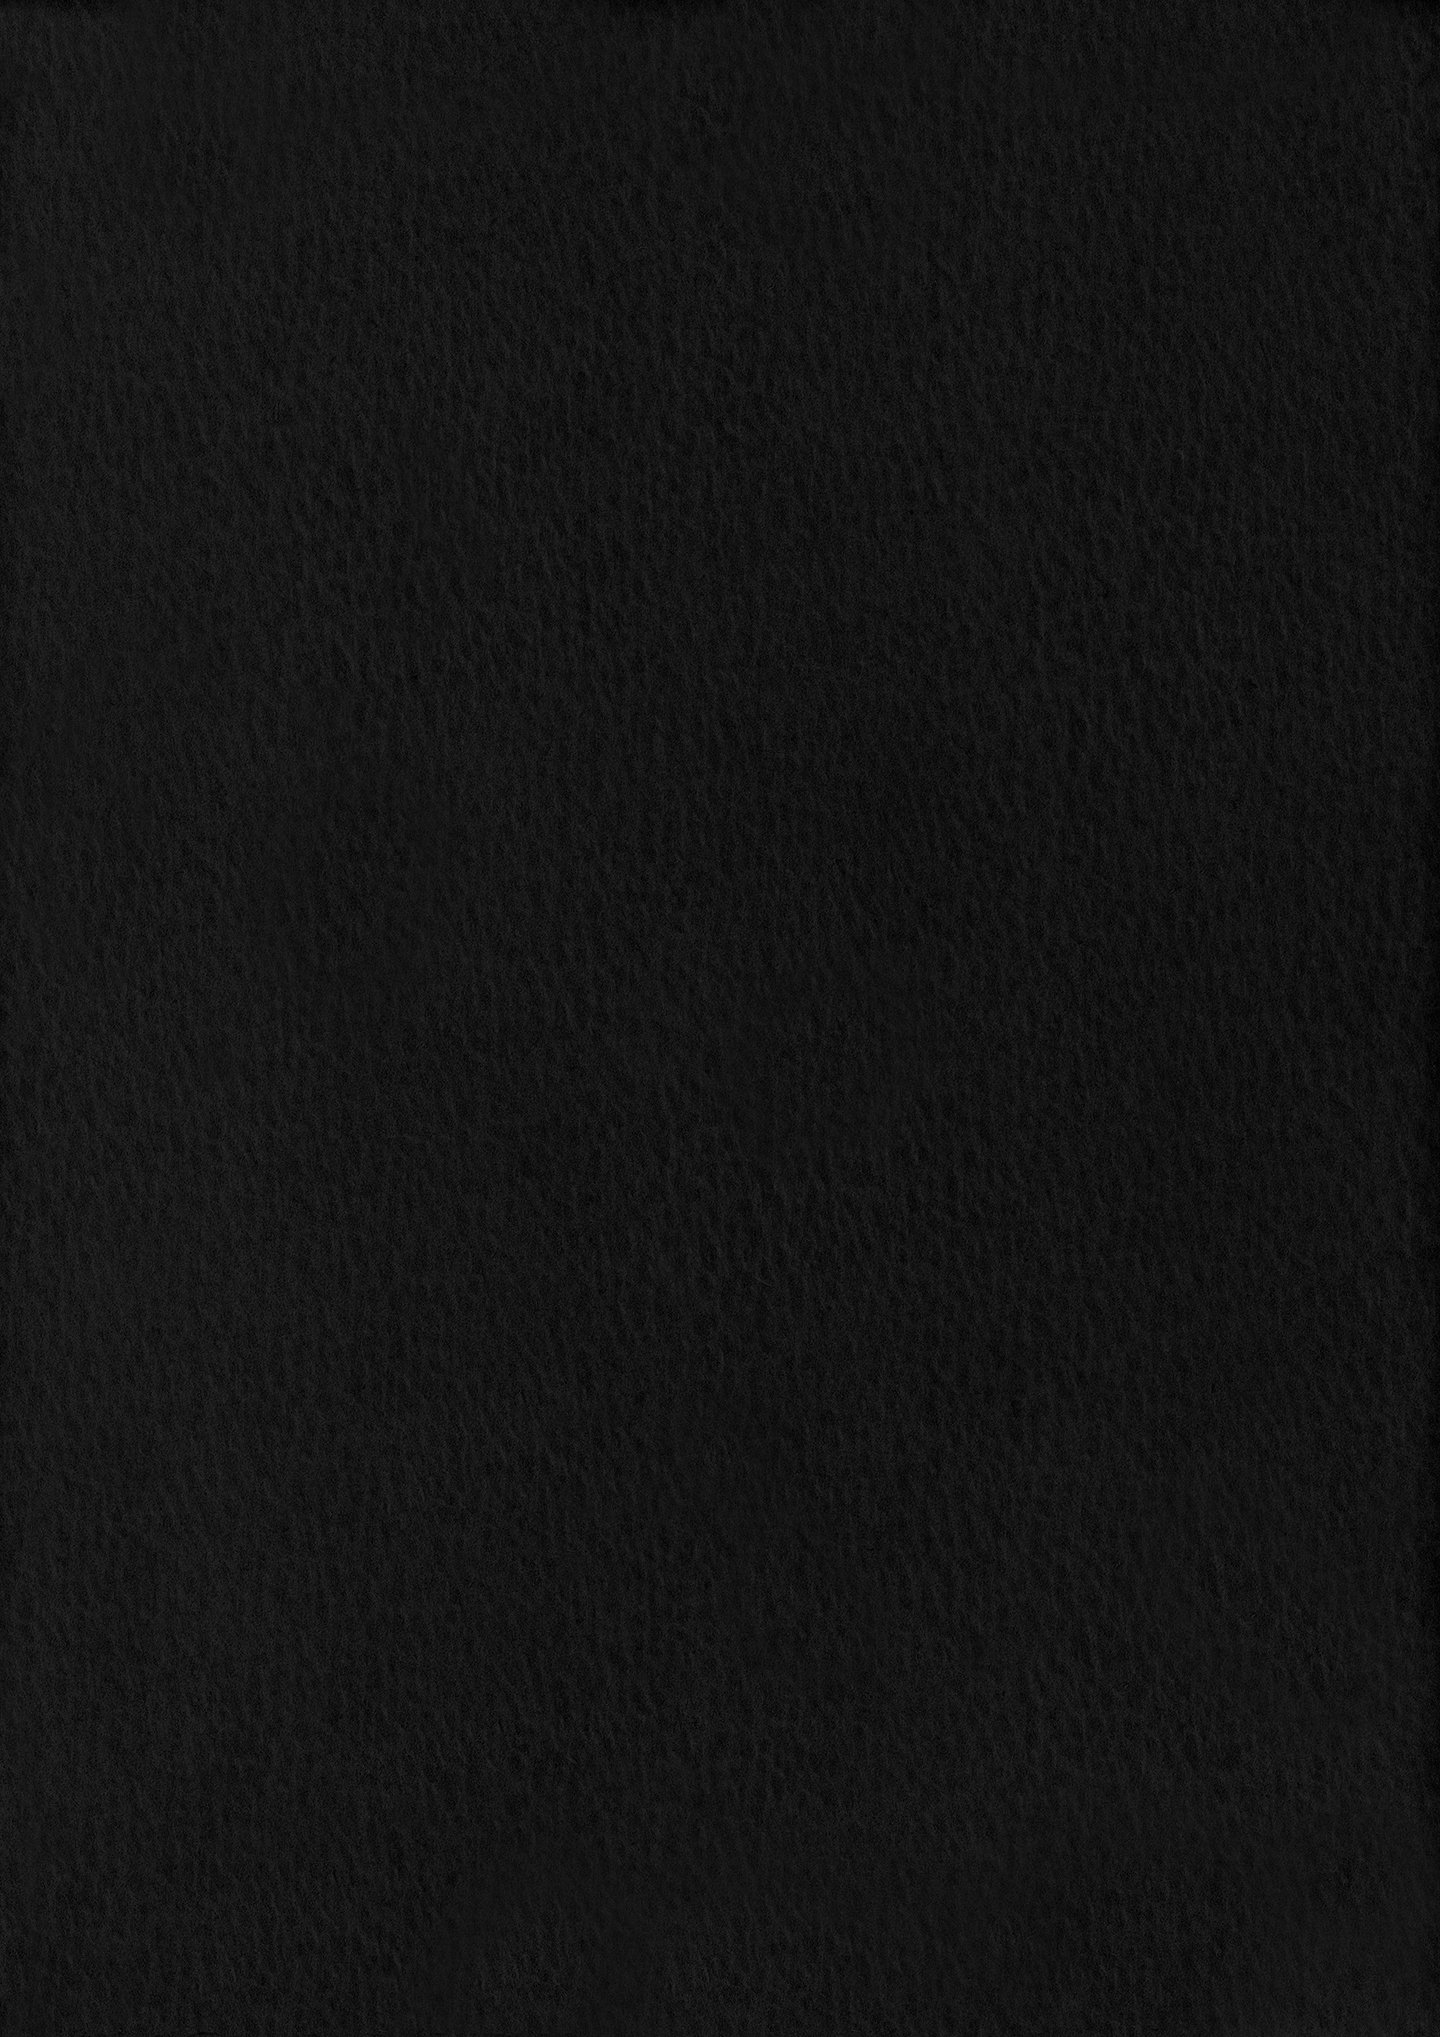 07 black paper different texture types a4 dapple 813